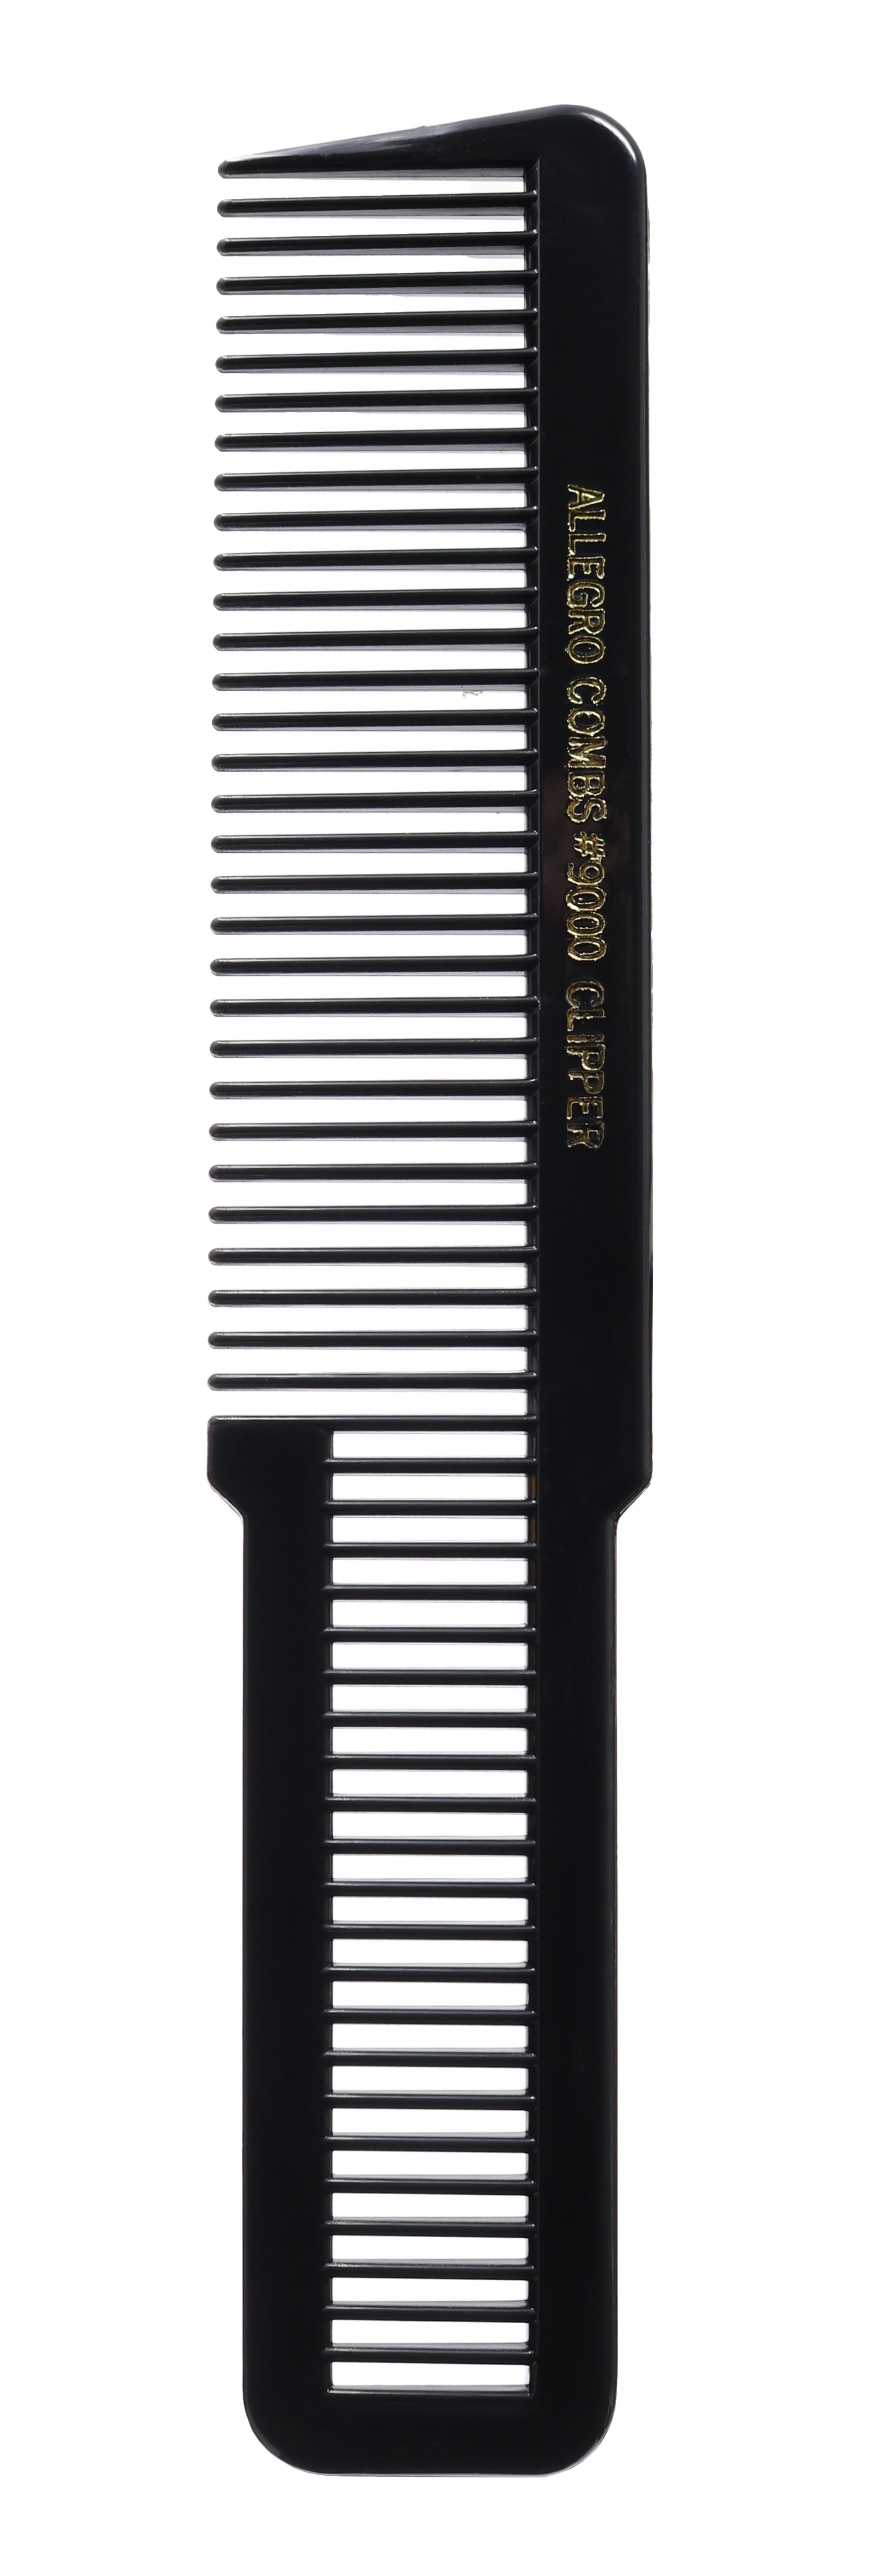 Allegro Combs 9000 Barber Clipper Cutting Combs Blending And Flat Top Combs Fading CombsBlack Combs 6 Pk.